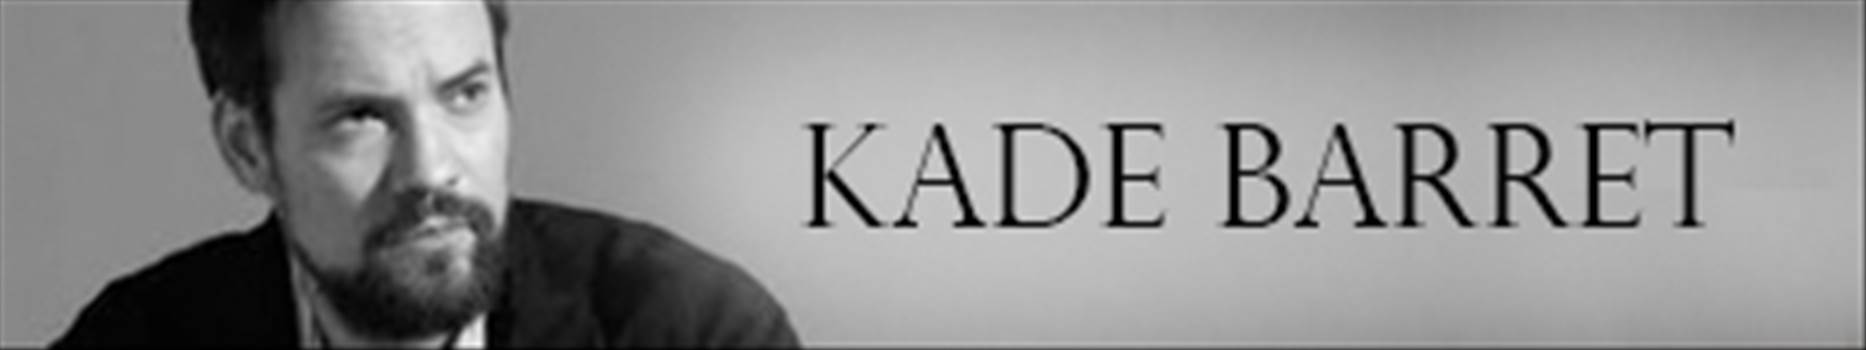 kade-soe-tracker.jpg by Kyra Wensing